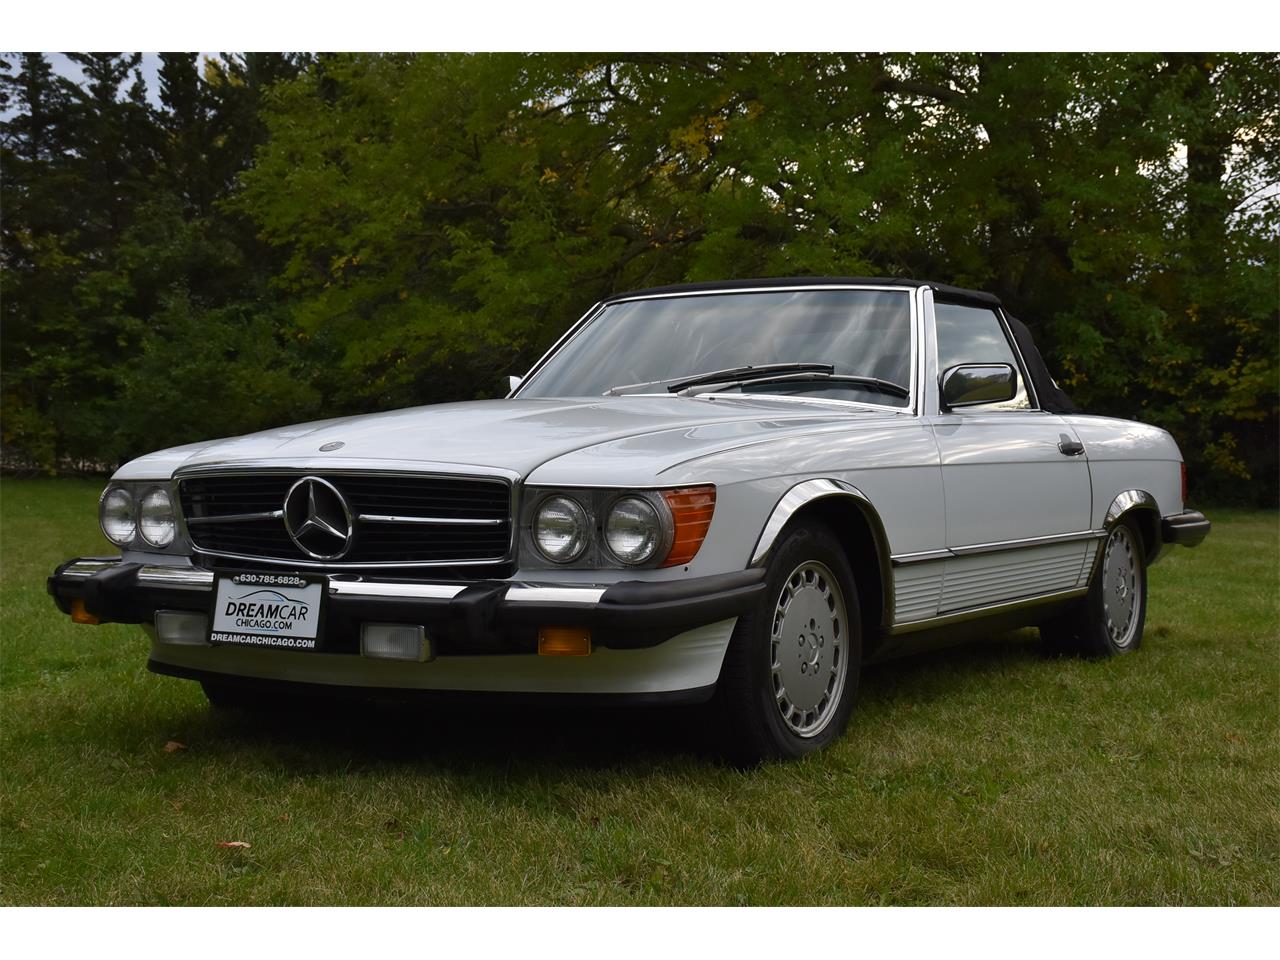 For Sale: 1986 Mercedes-Benz 560SL in Villa Park, Illinois for sale in Villa Park, IL